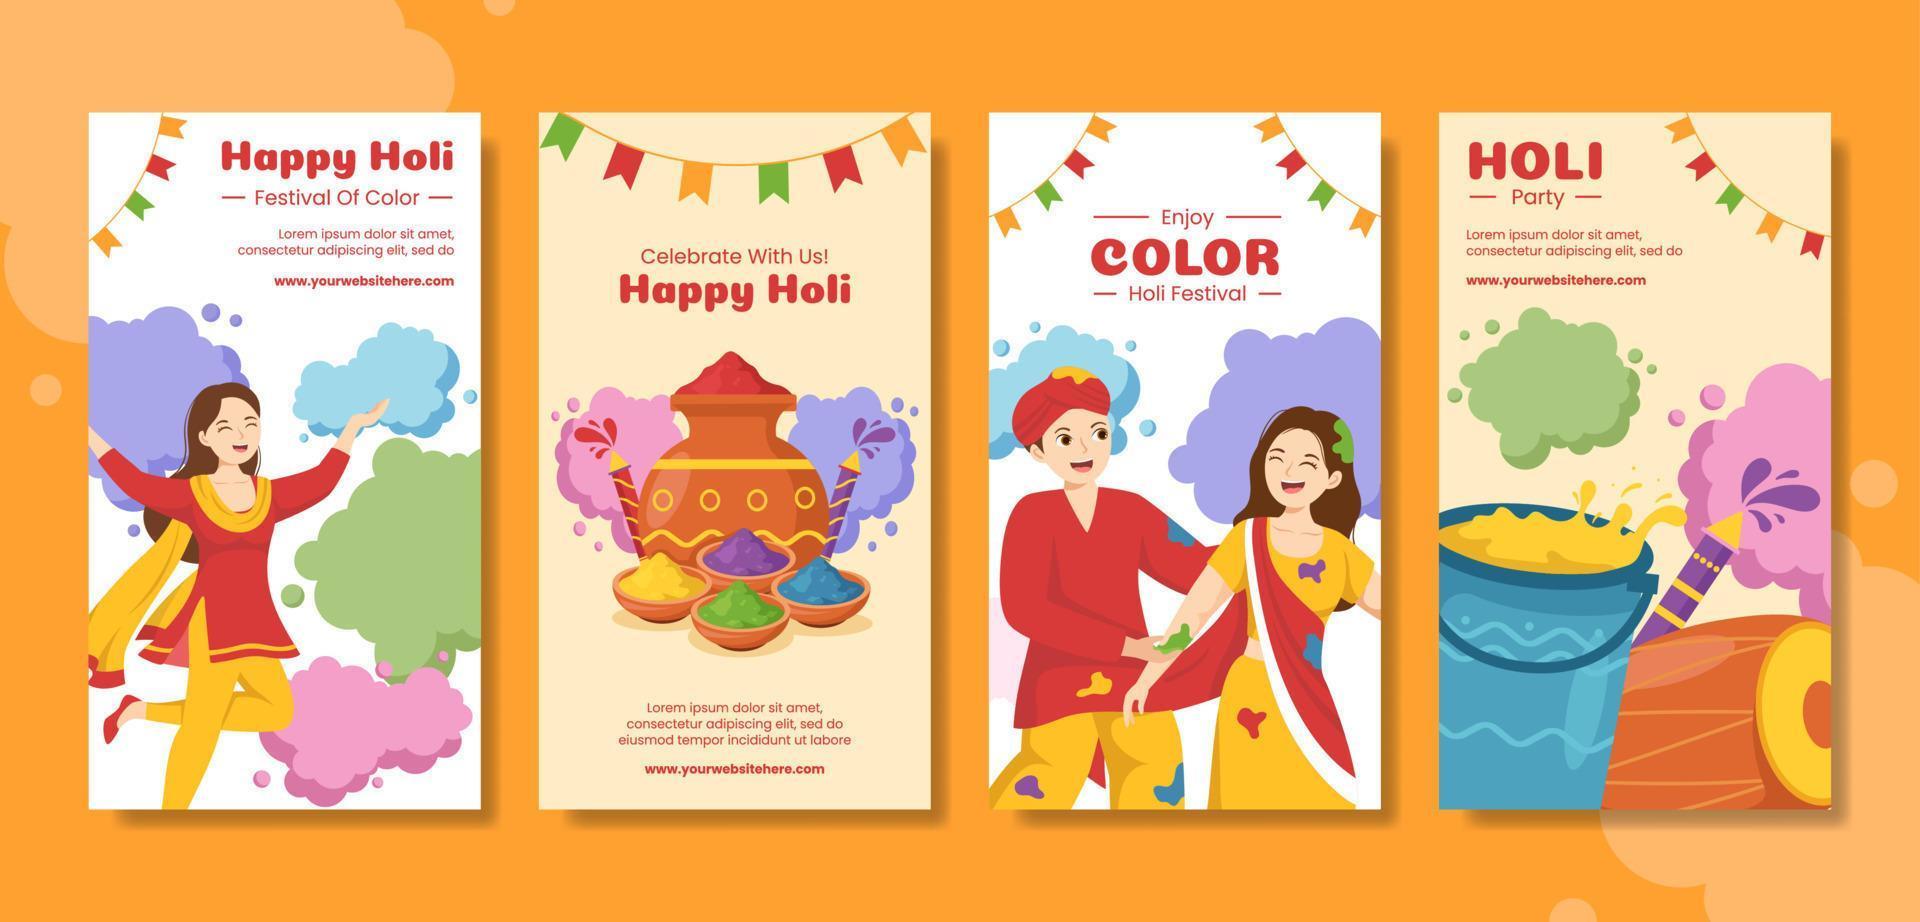 Happy Holi Festival Social Media Stories Flat Cartoon Hand Drawn Templates Illustration vector